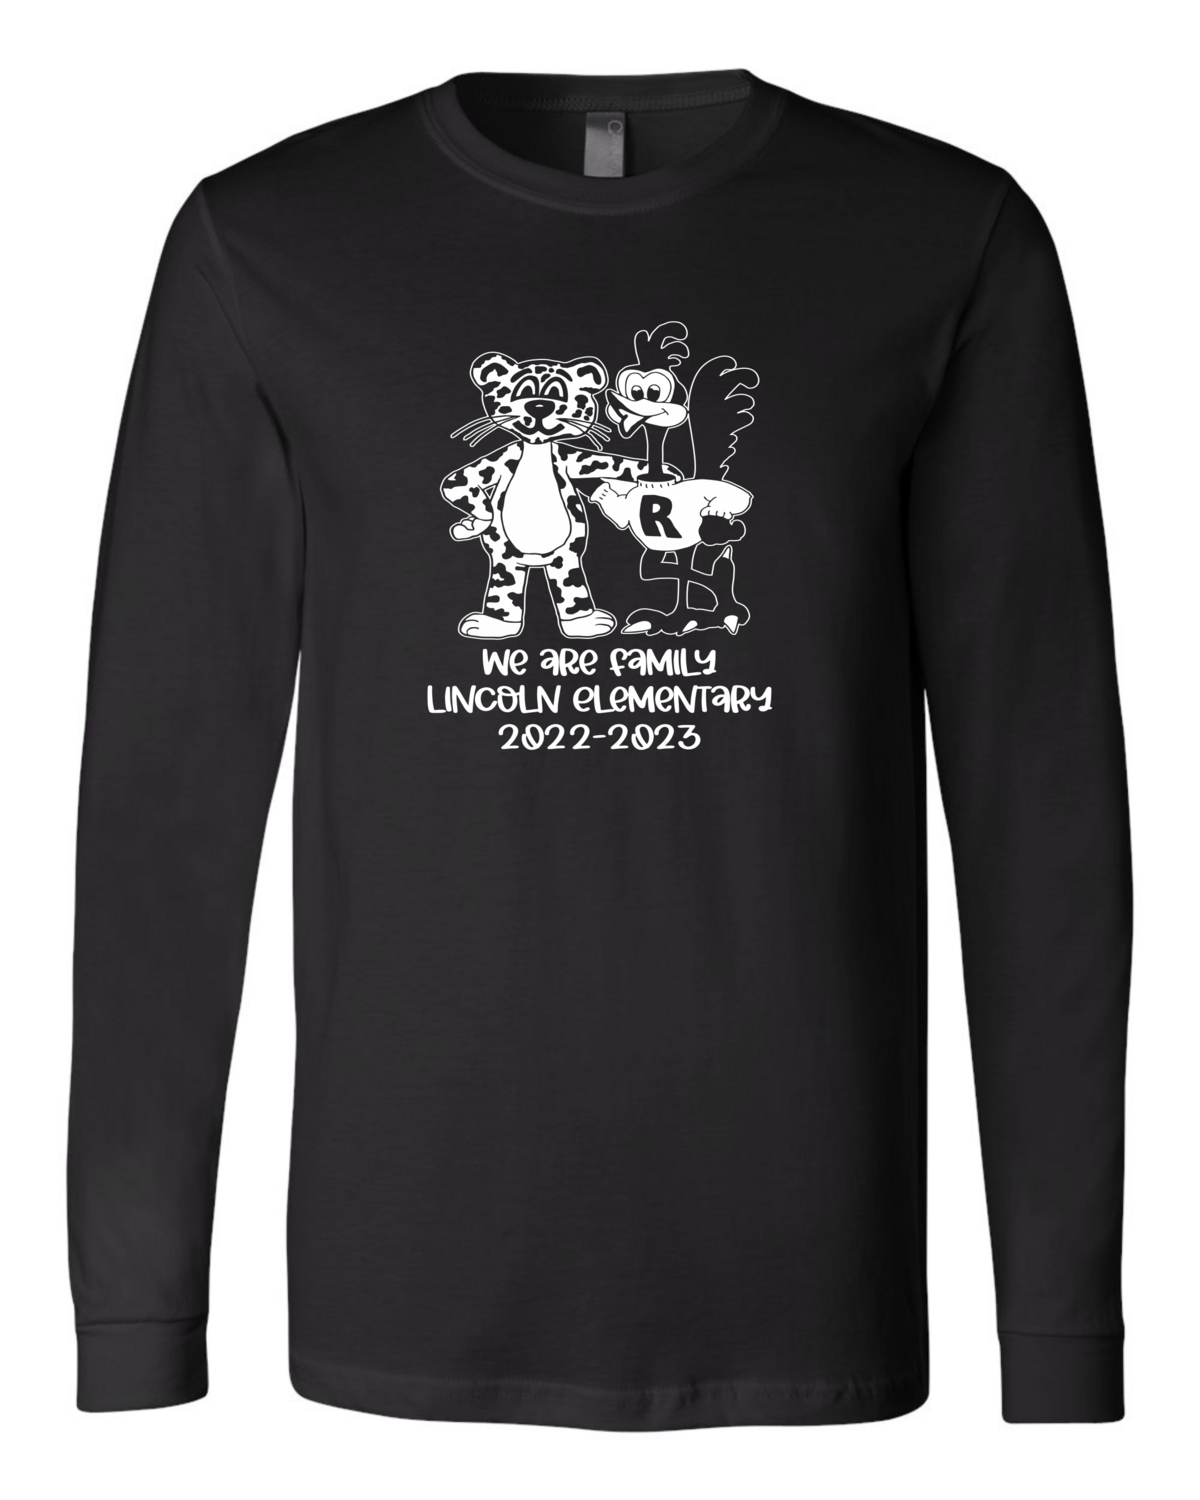 Lincoln Elementary Long Sleeve Shirt 22-23